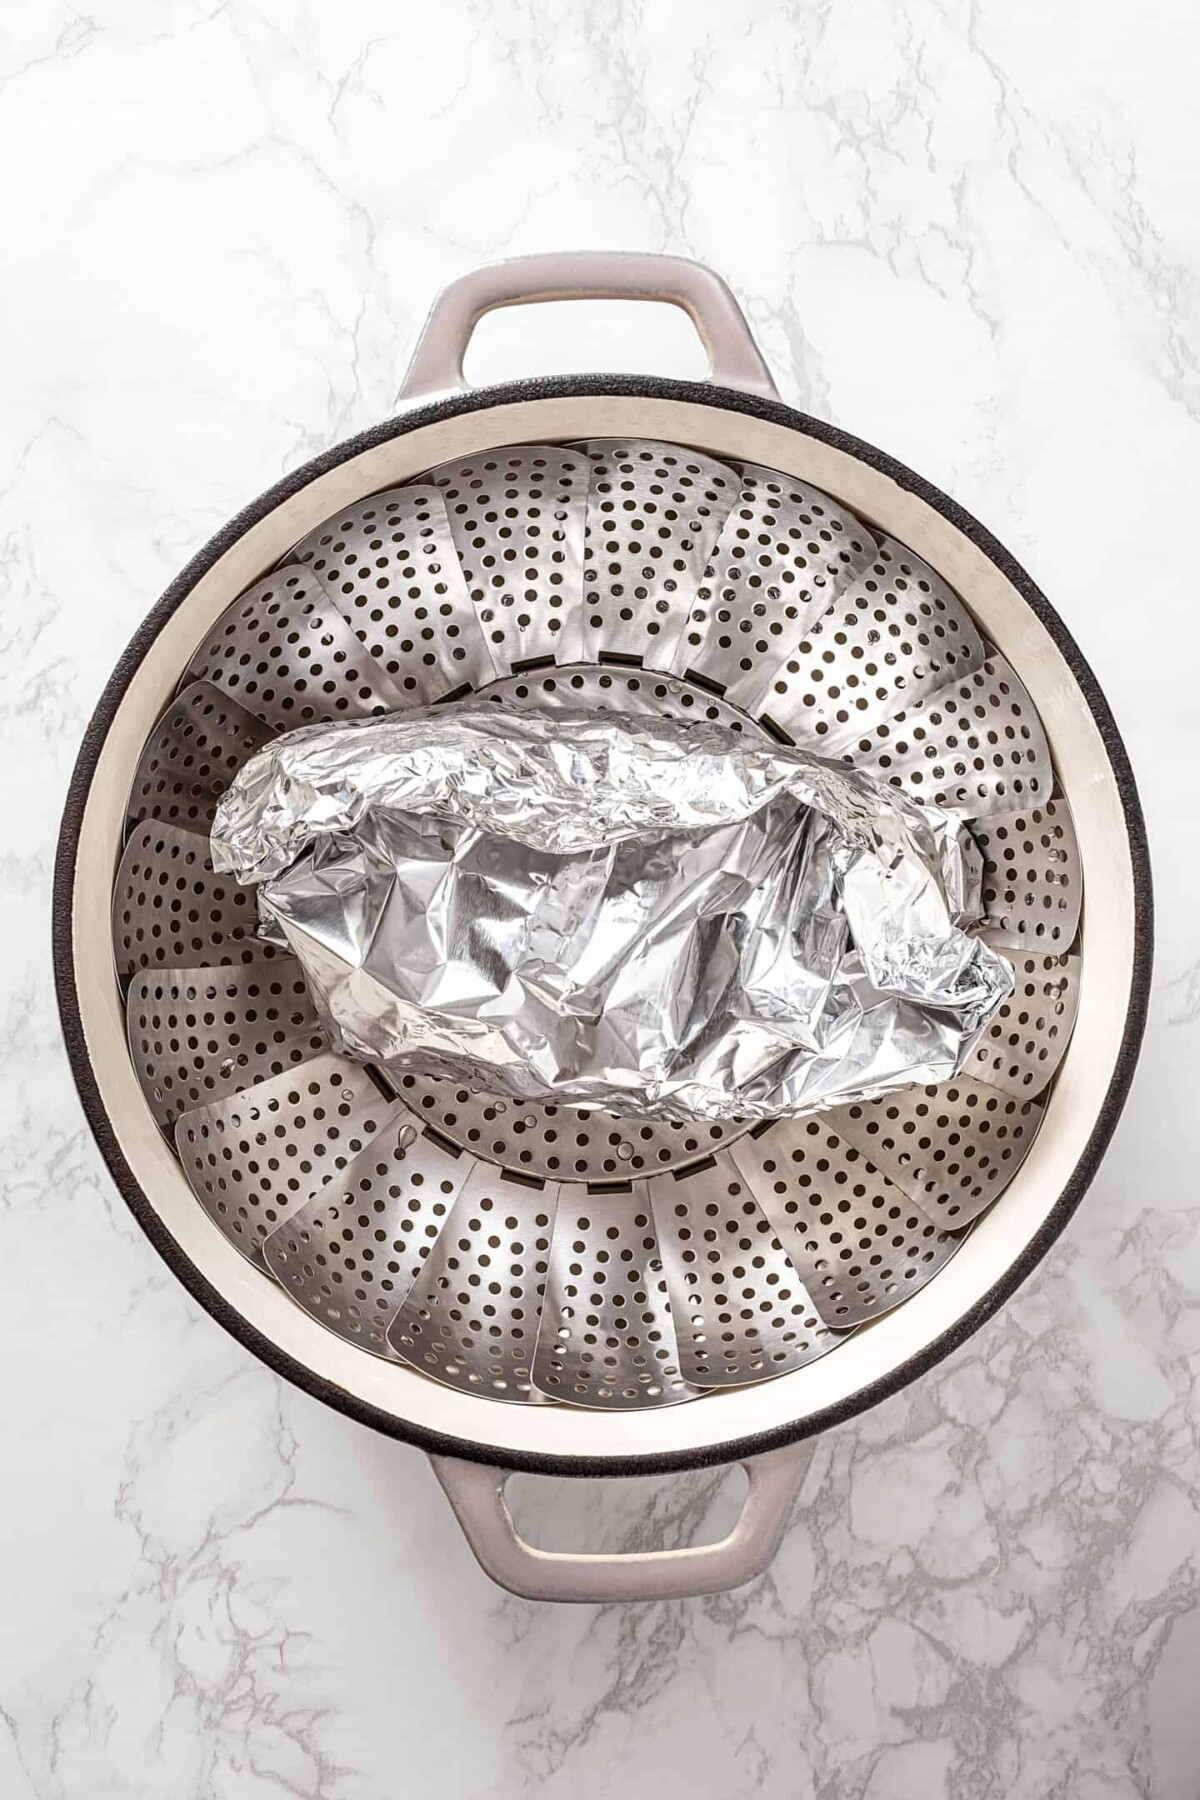 Tin foil-wrapped vegan turkey roast in a steamer